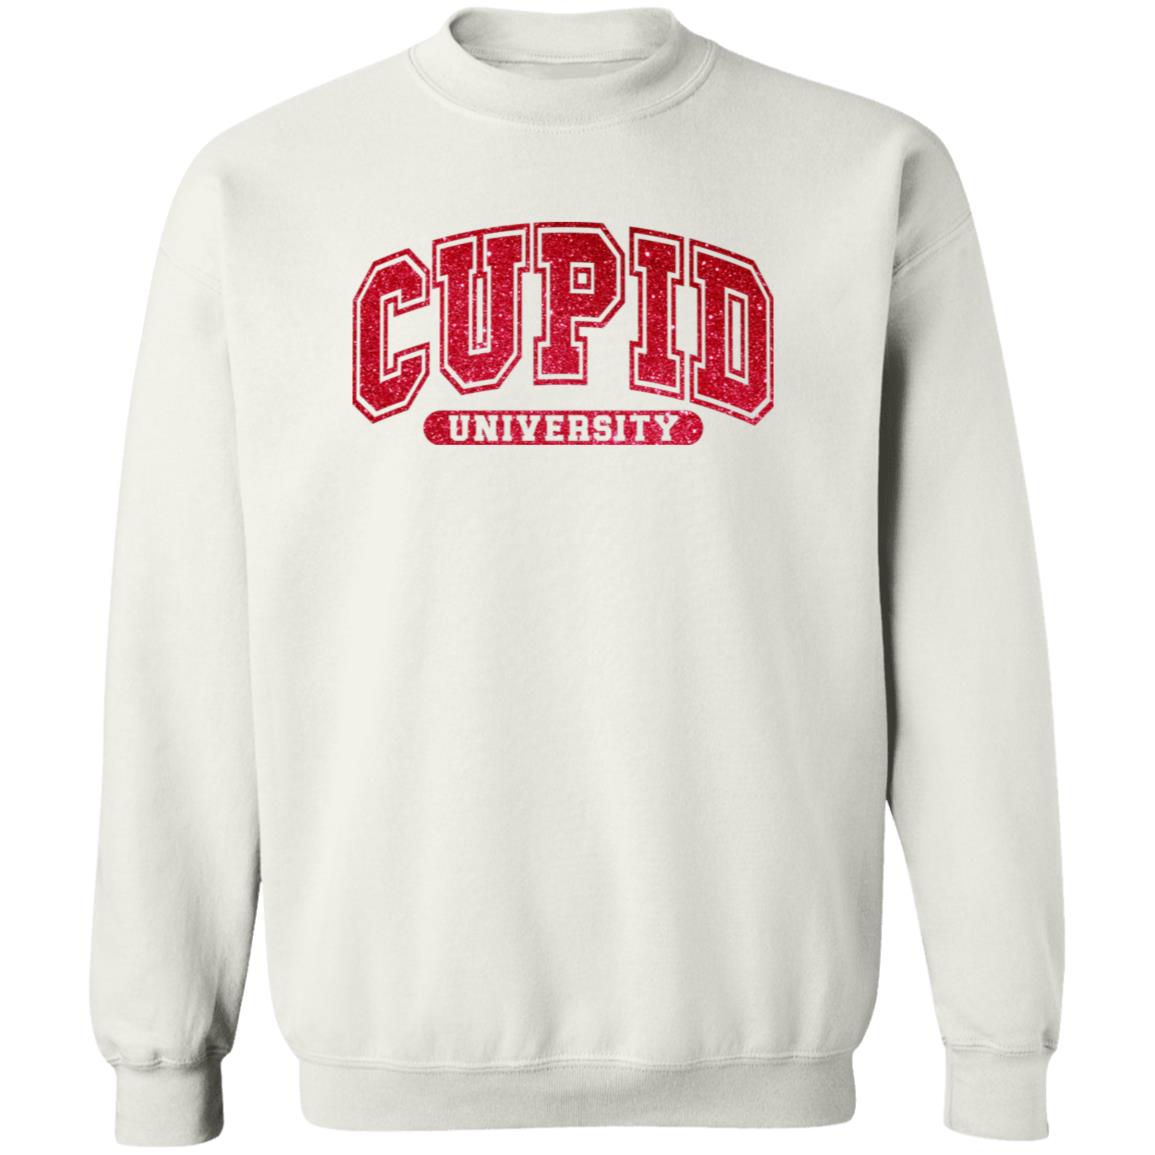 Cupid University Crewneck Pullover Sweatshirt